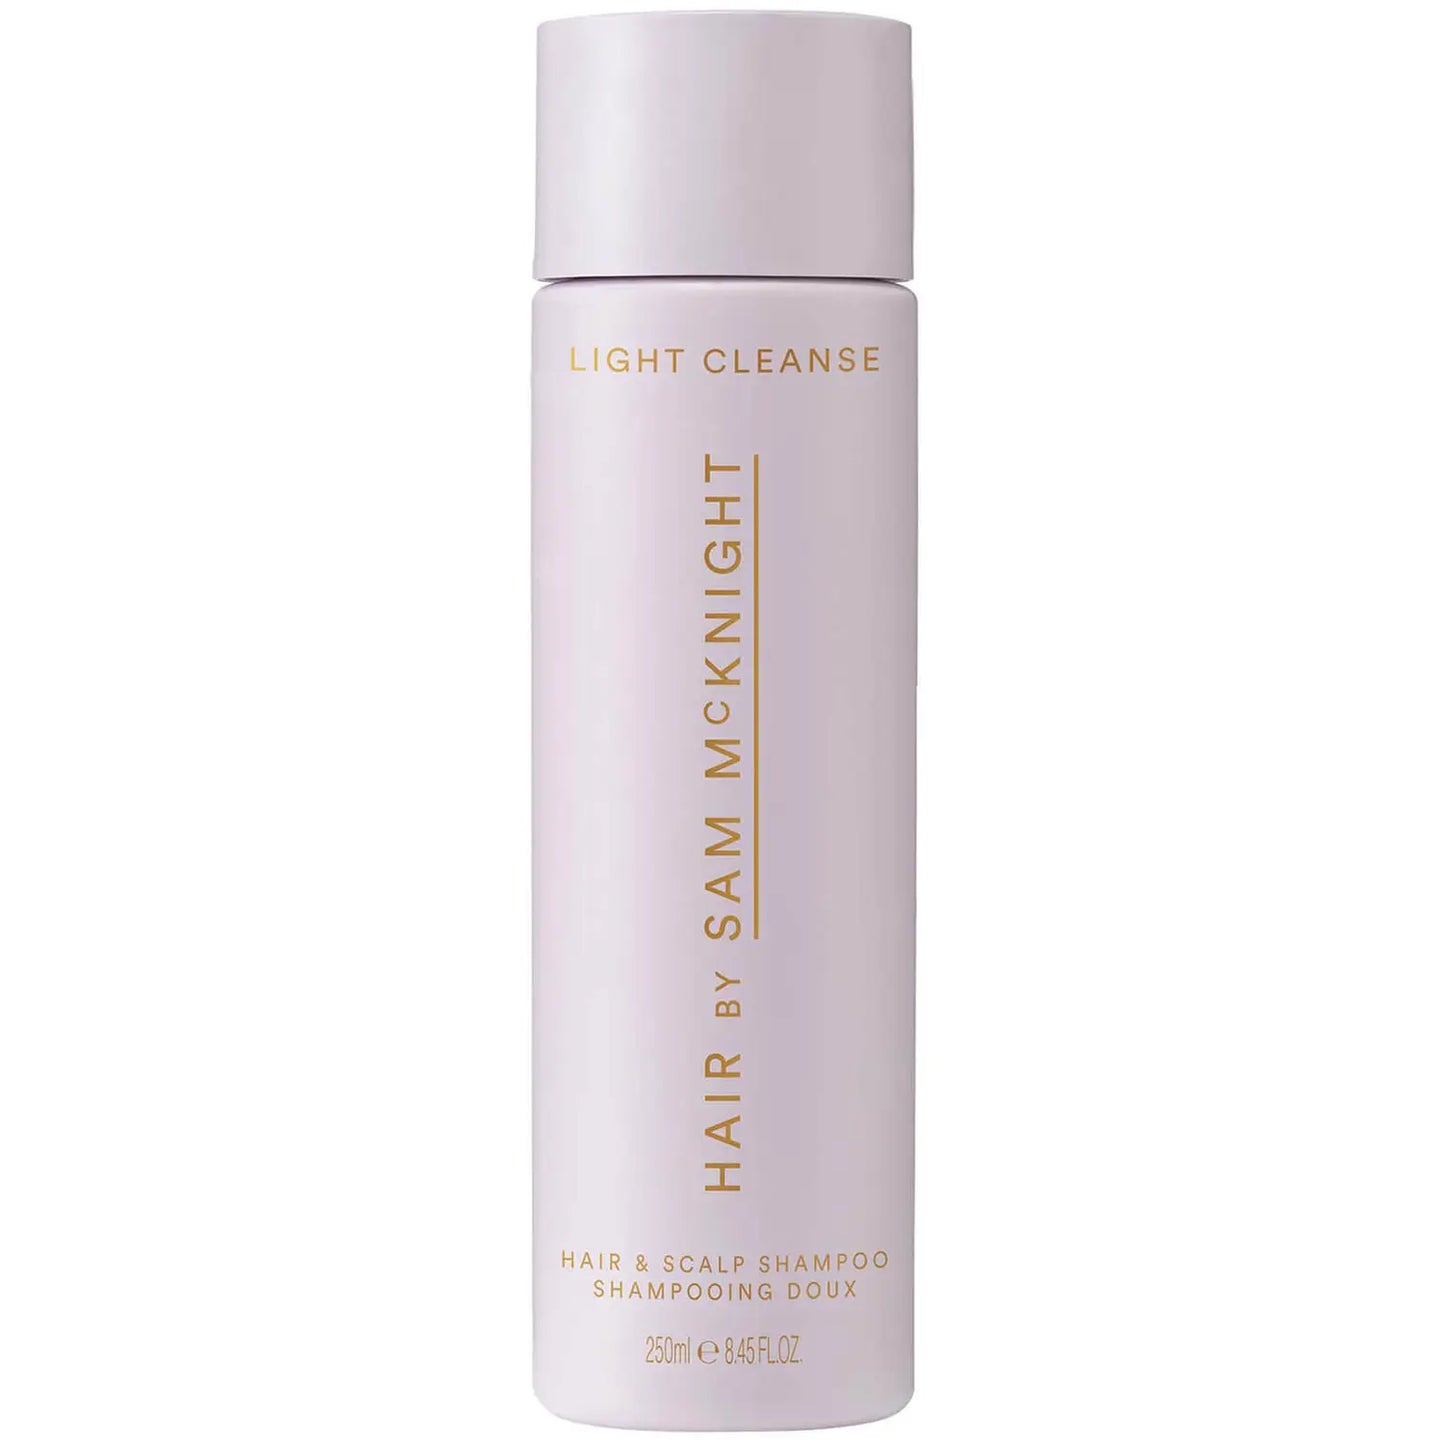 Light Cleanse - Hair & Scalp Shampoo 250ml